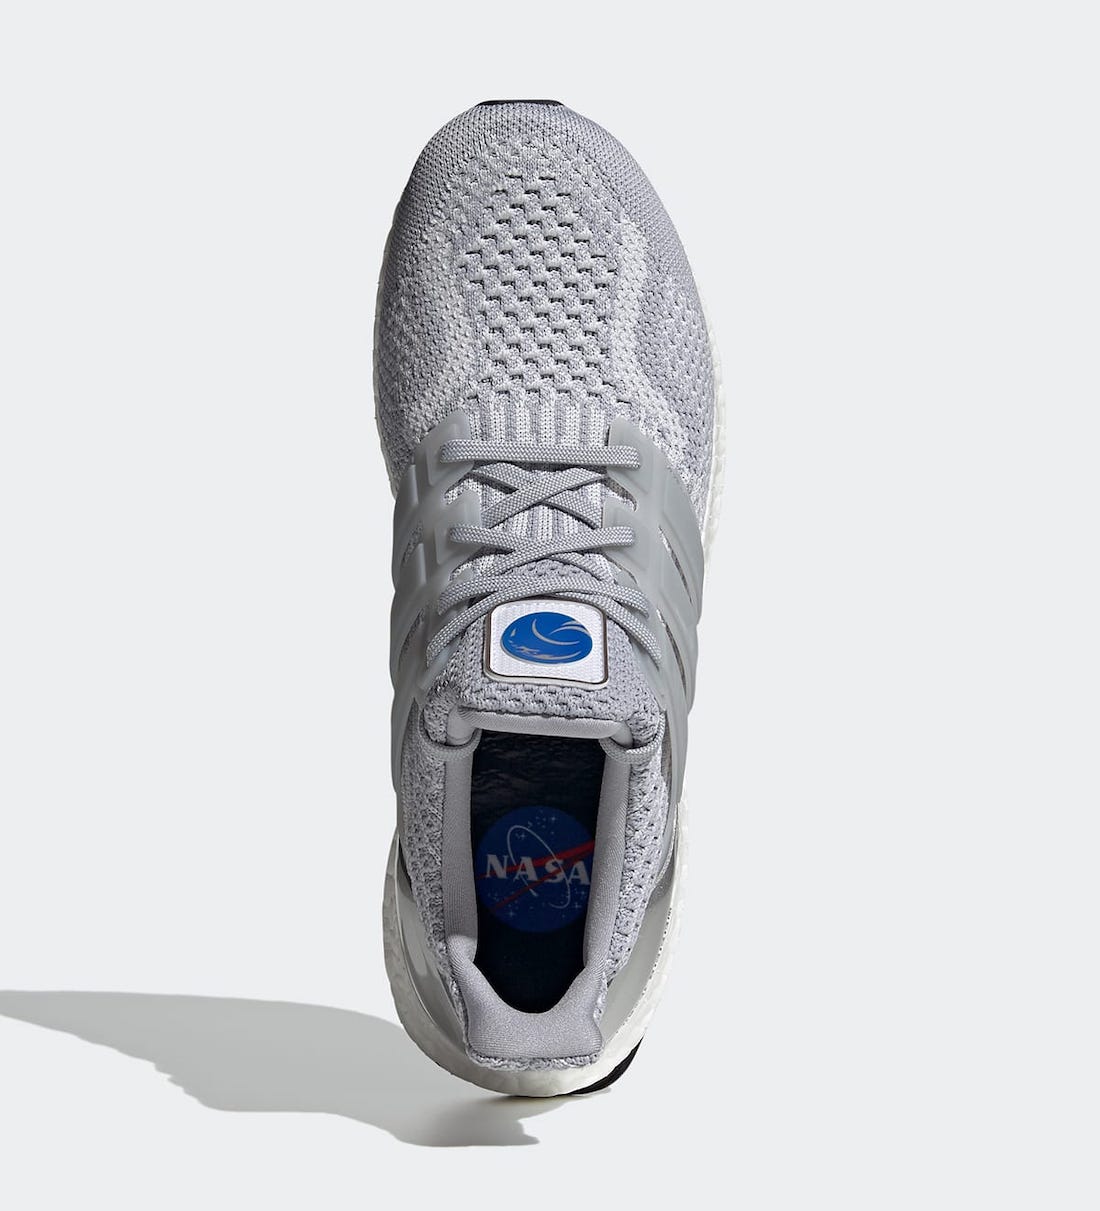 NASA adidas Ultra Boost DNA FX7972 Release Date